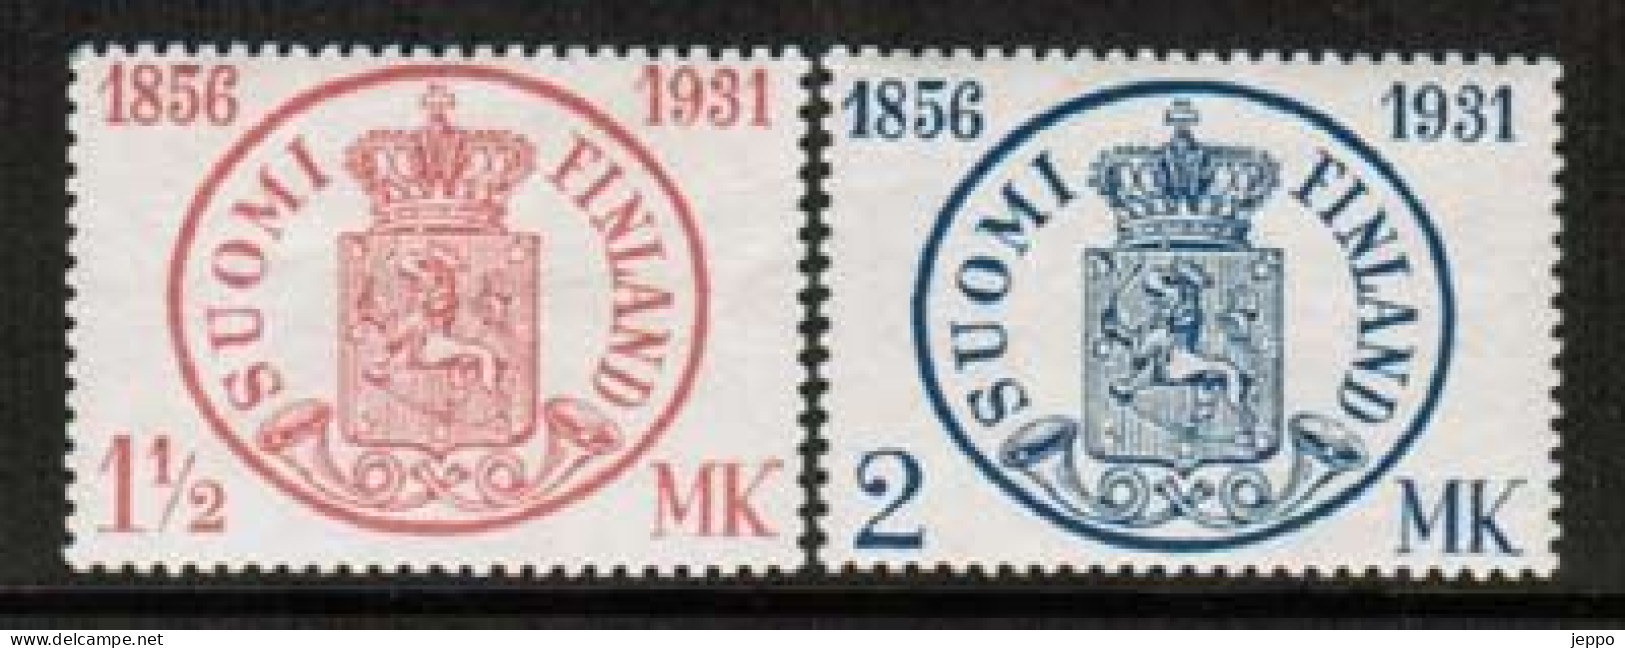 1931 Finland Stamp Jubilee Very Fine Complete Set MNH. - Nuovi